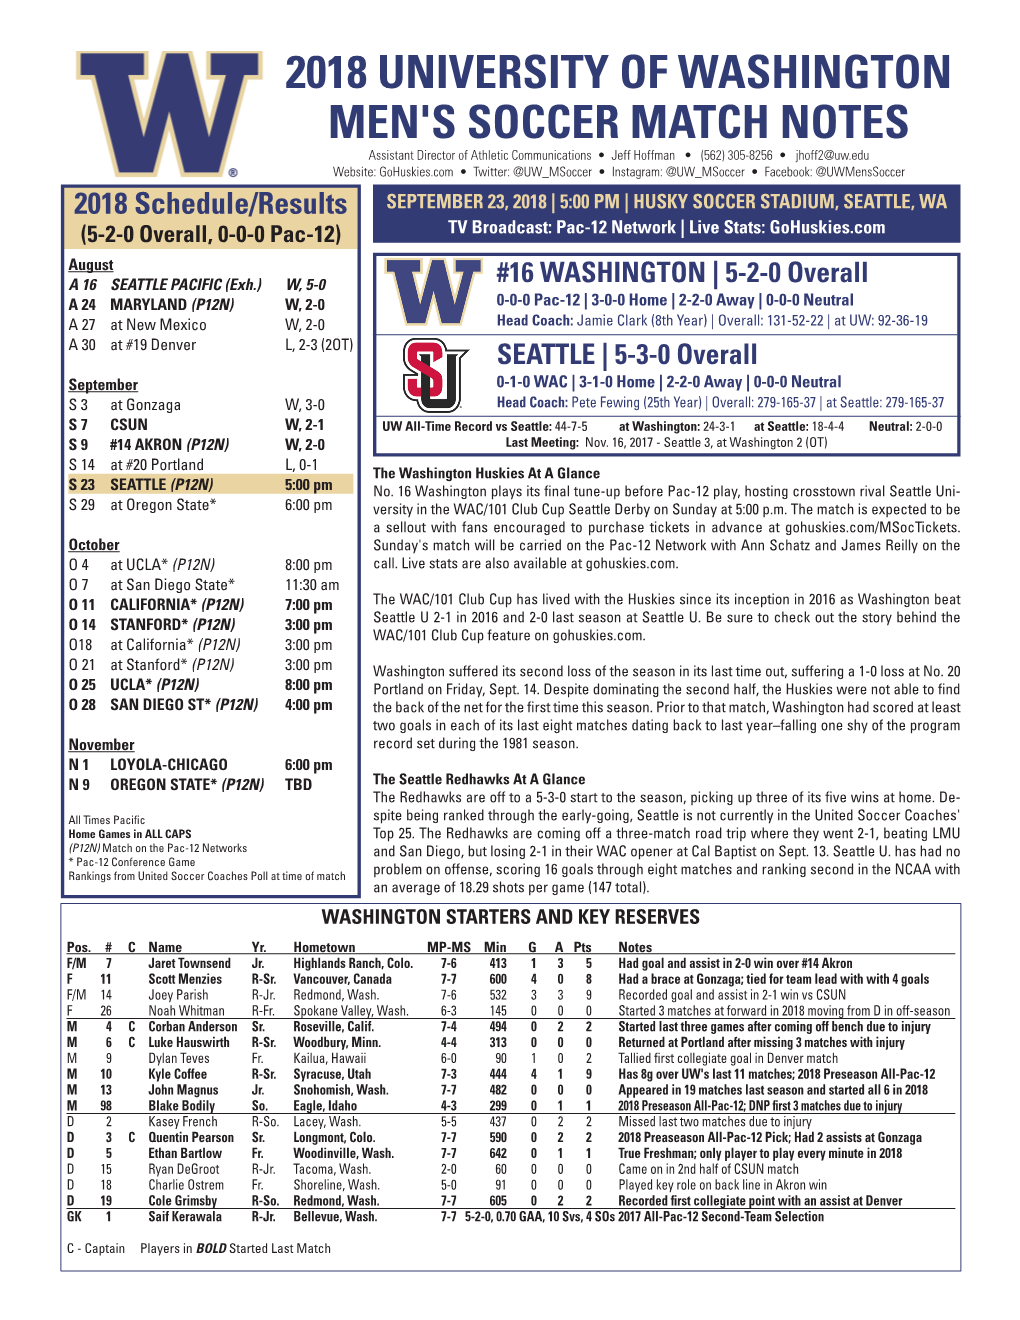 2018 University of Washington Men's Soccer Match Notes